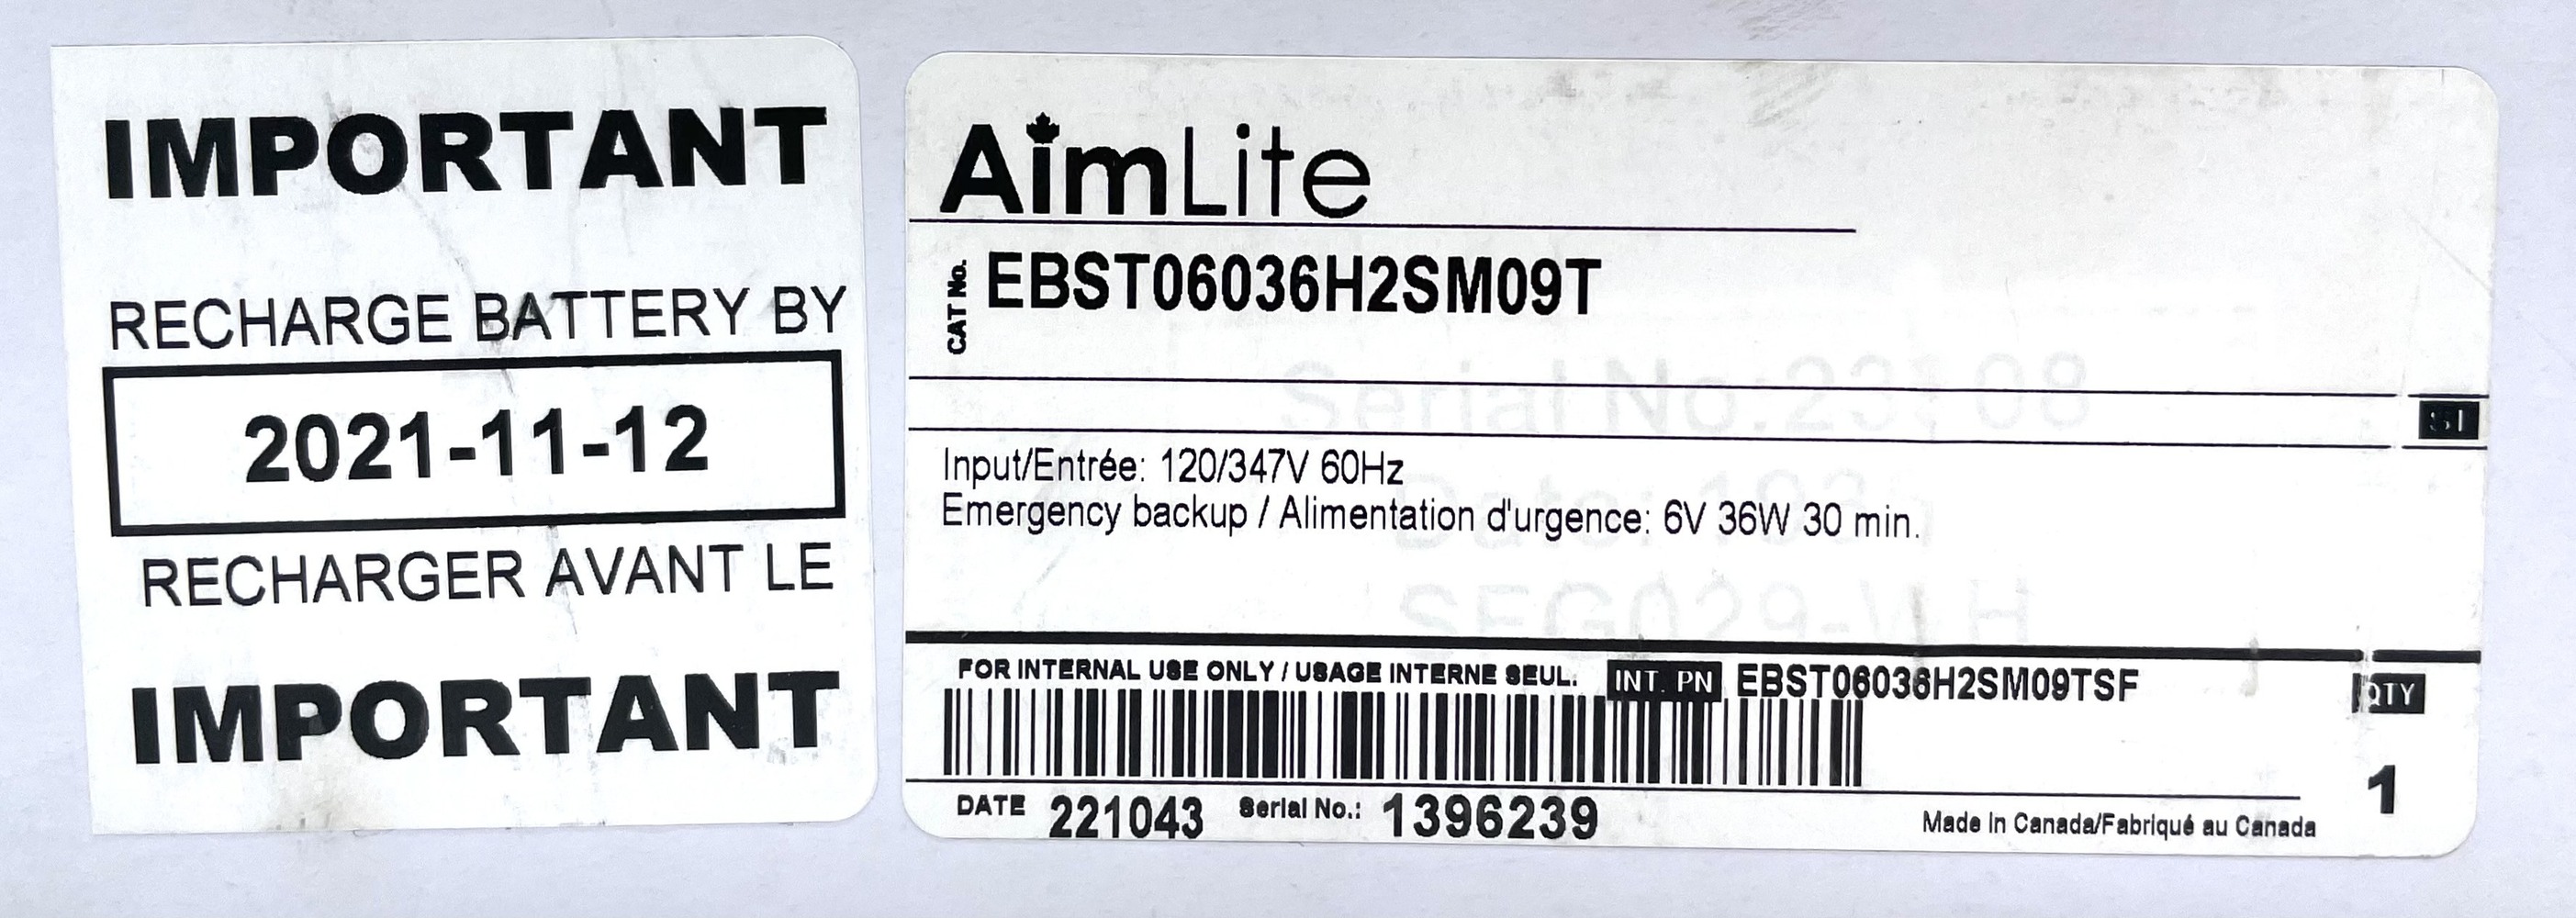 Aimlite EBST12072-2SM09T Emergency Light